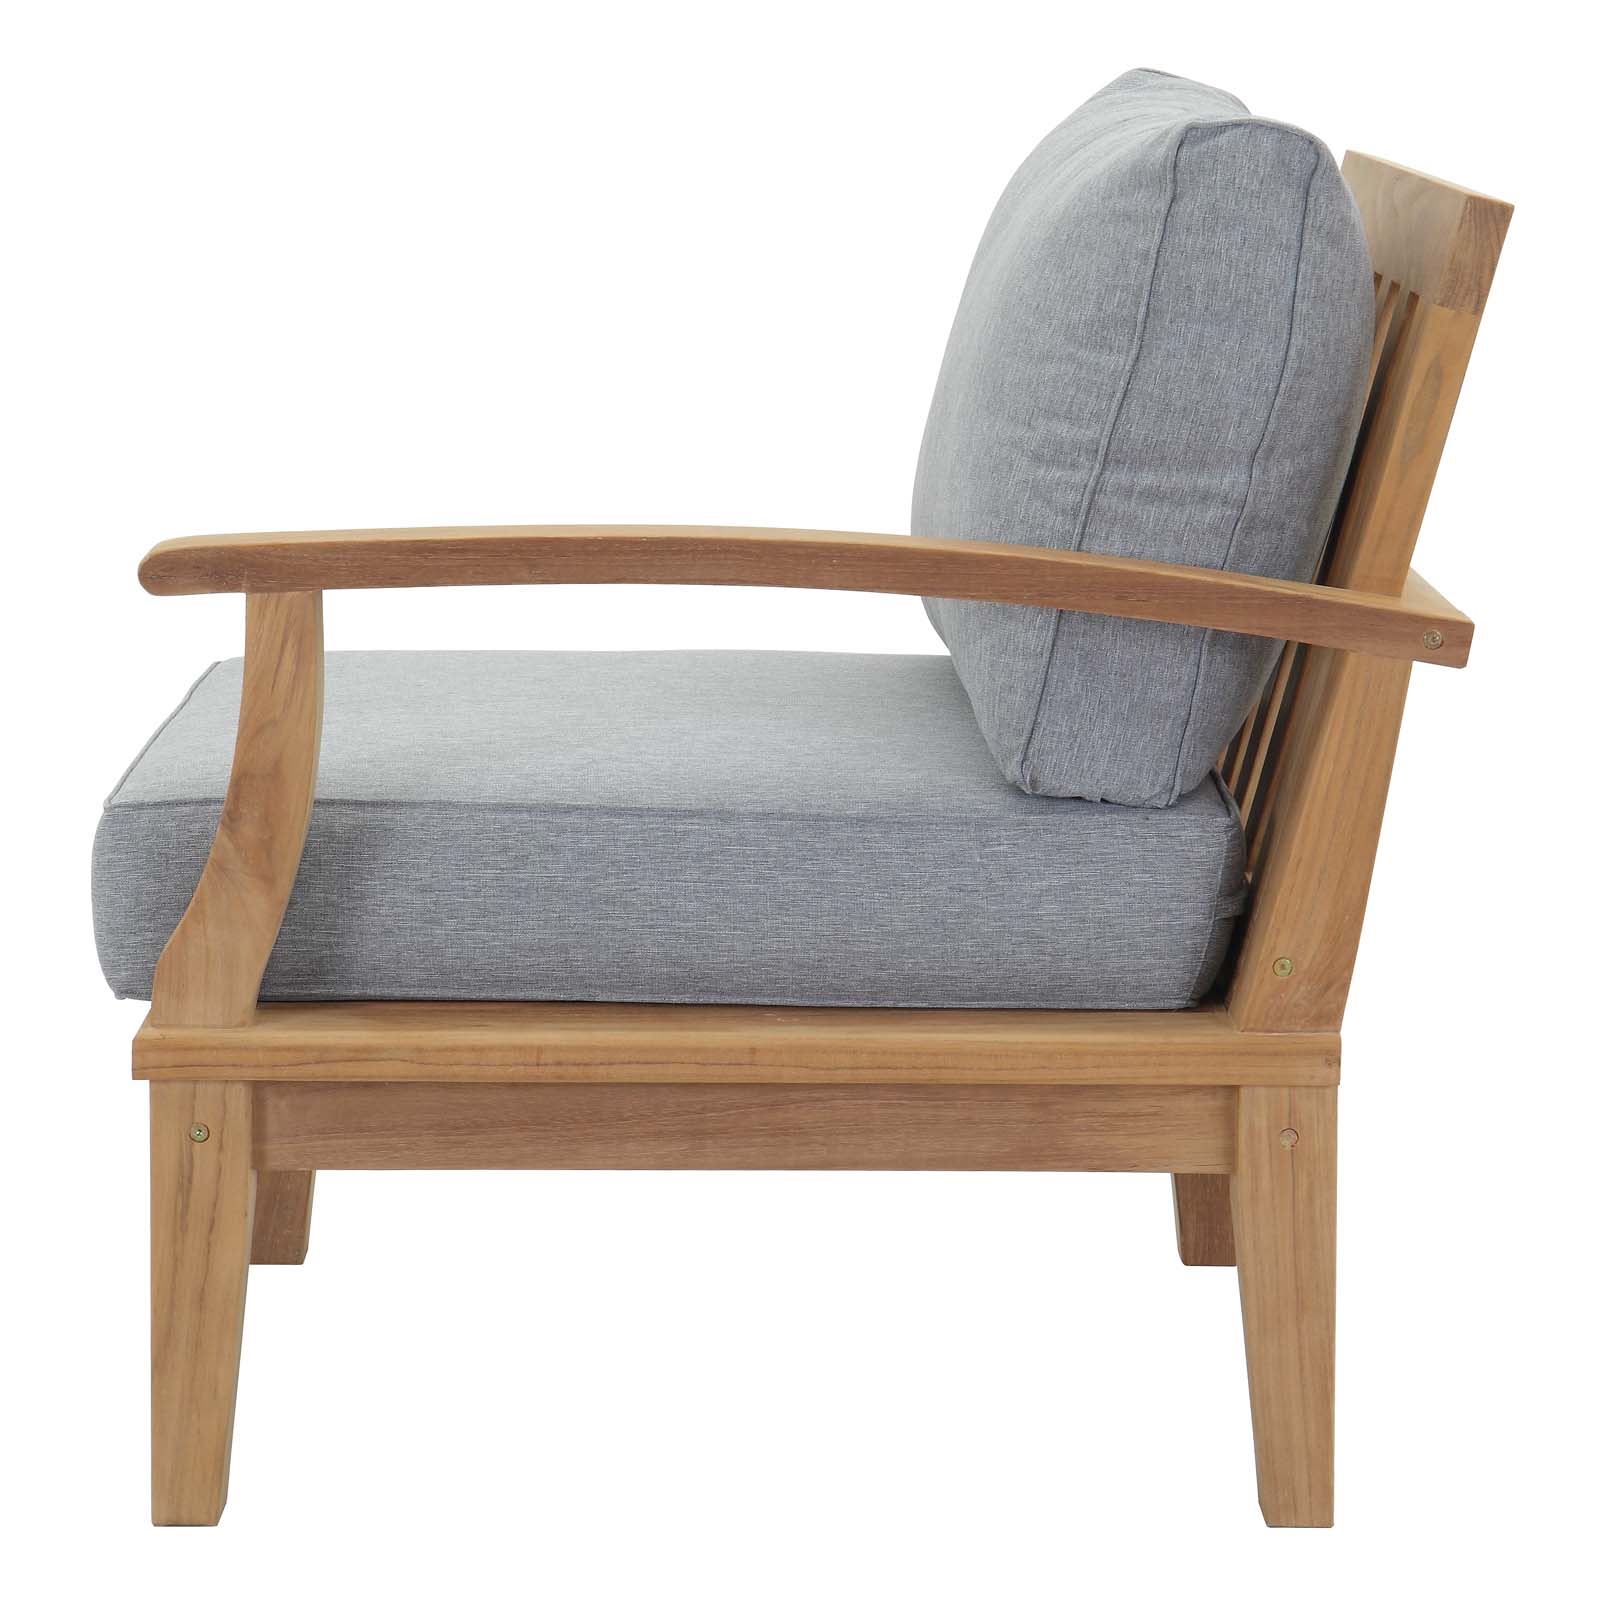 Modern Contemporary Urban Design Outdoor Patio Balcony Garden Furniture Lounge Chair Set, Wood, Grey Gray Natural - image 4 of 6